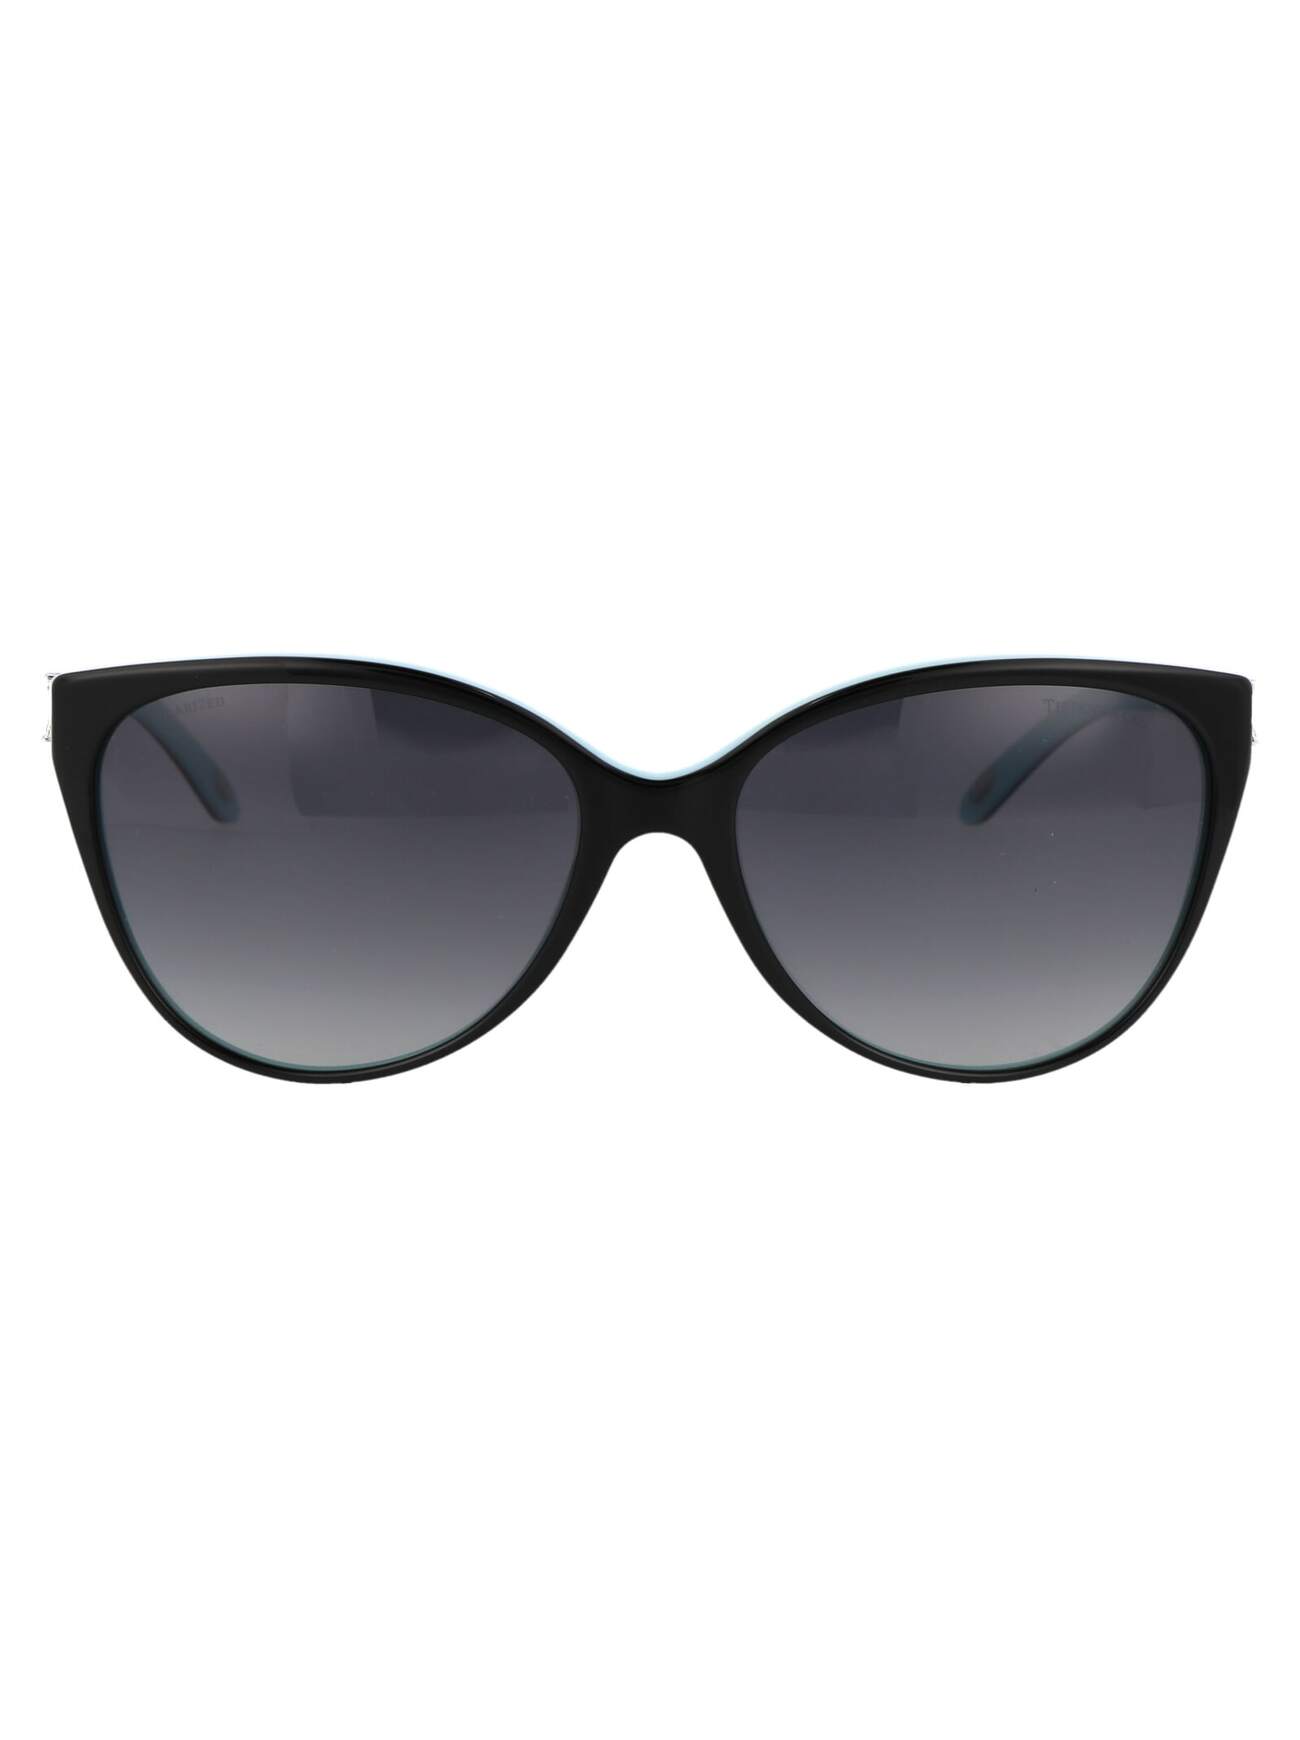 Tiffany & Co. Tiffany & Co. 0tf4089b Sunglasses in black / blue / grey